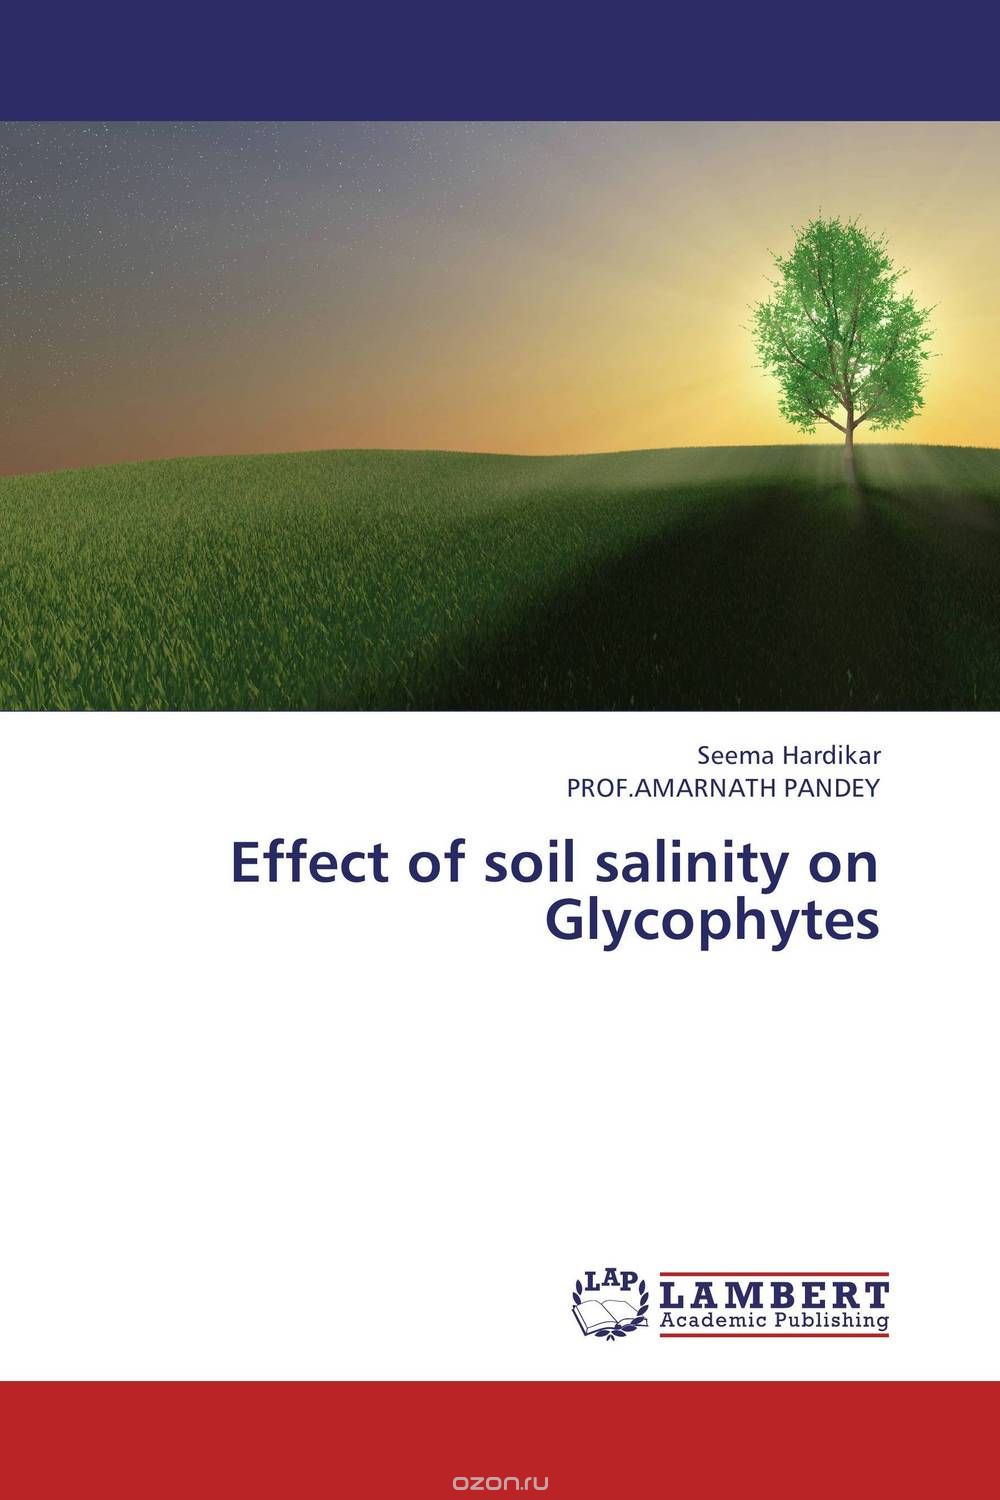 Скачать книгу "Effect of soil salinity on Glycophytes"